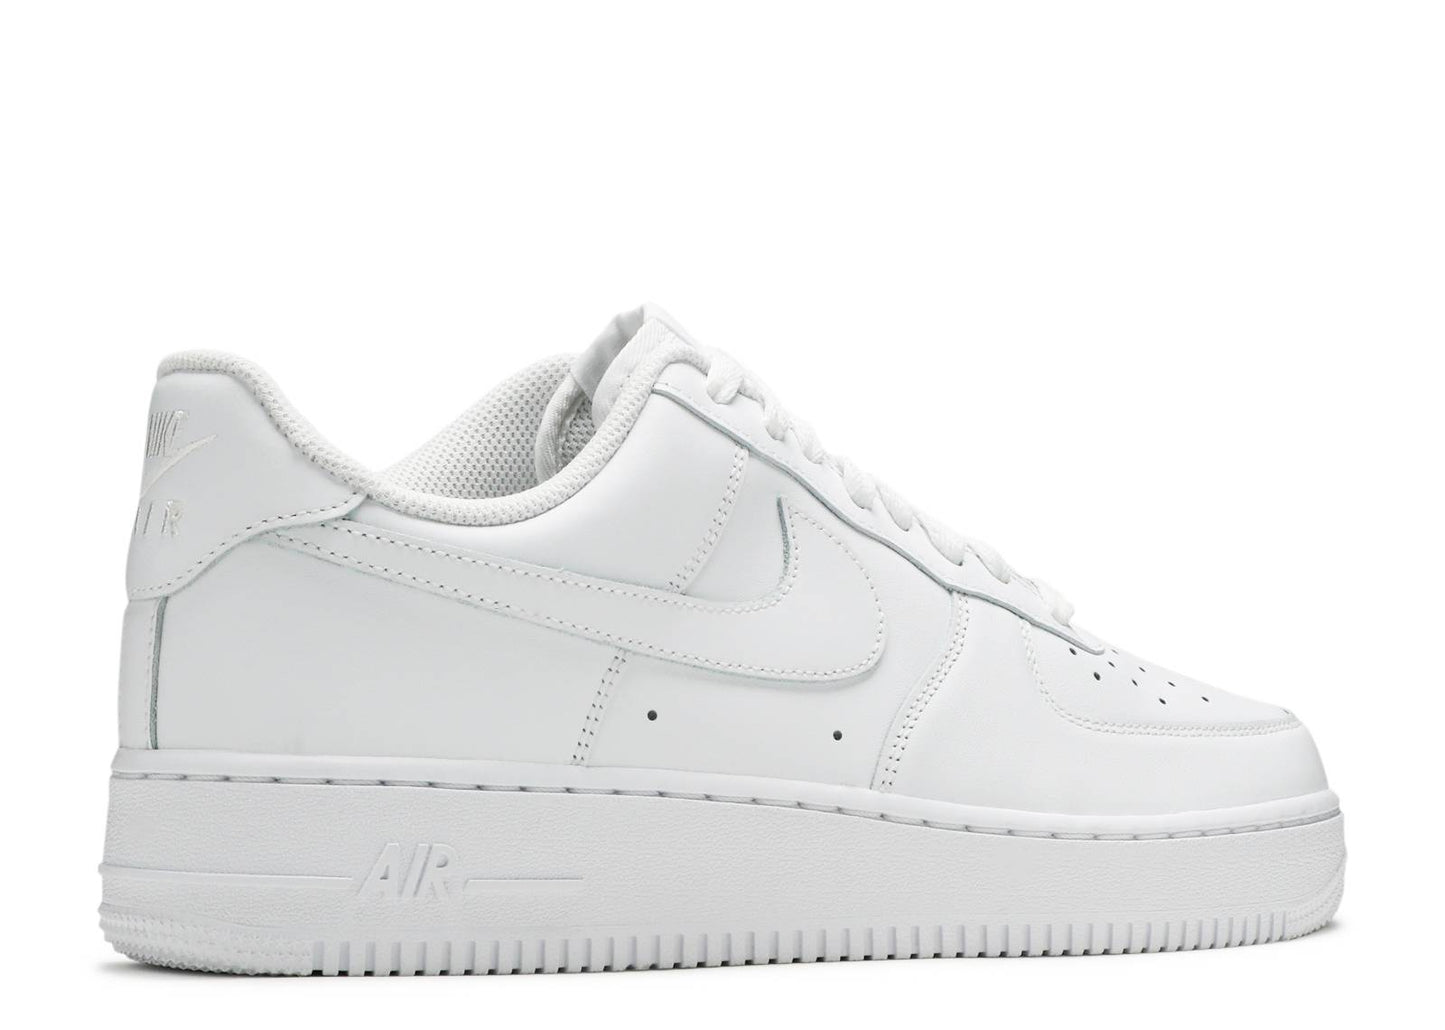 Nike Air Force 1 "White"